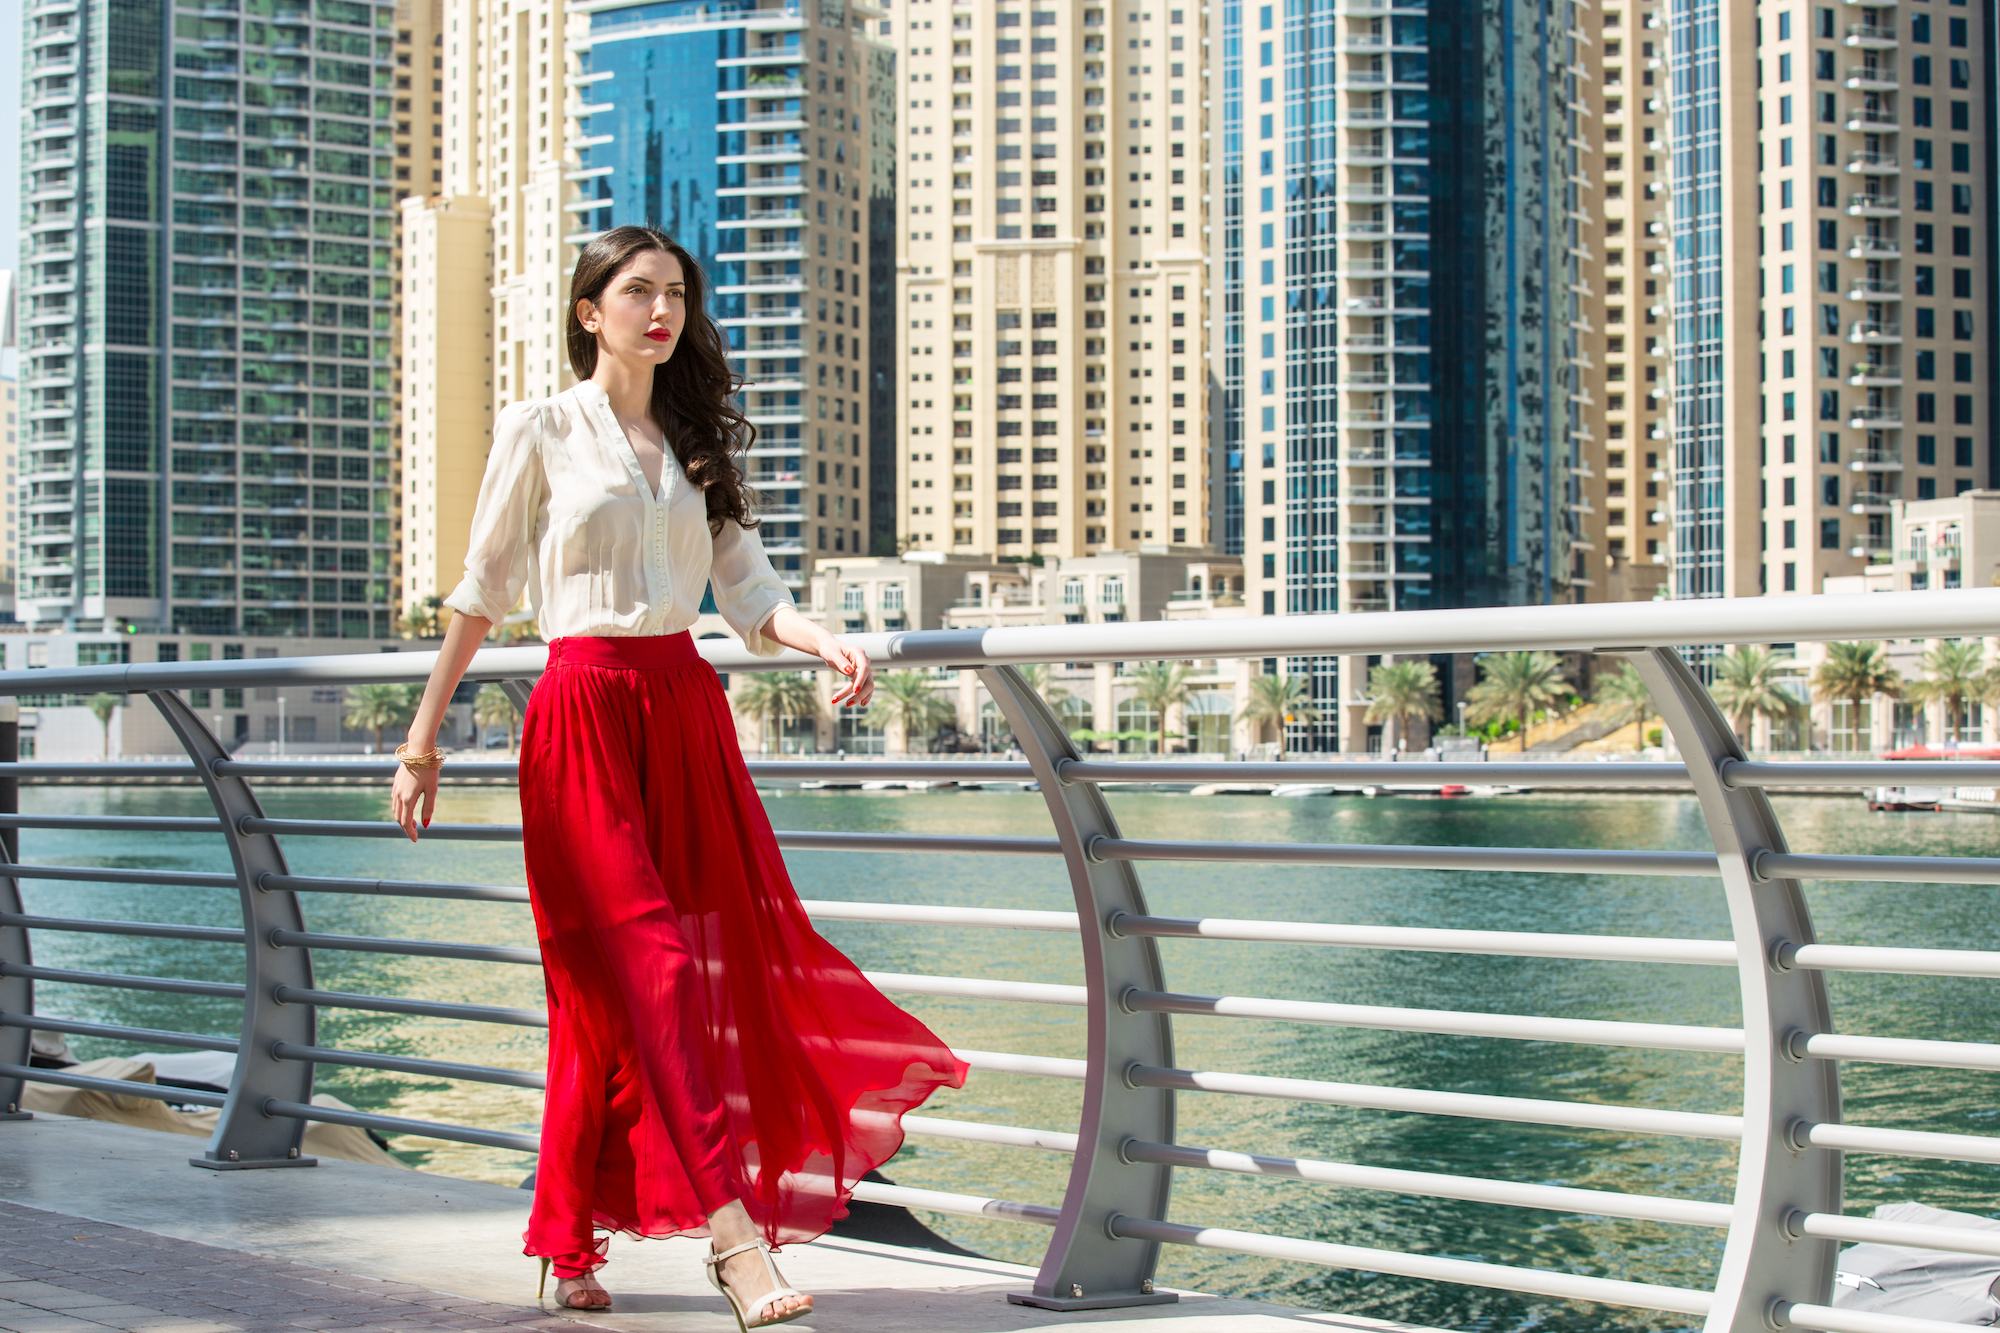 Buy ORANGE MAXI SKIRT Flowy Long Dress Soft Comfy Plus Size Online in India   Etsy